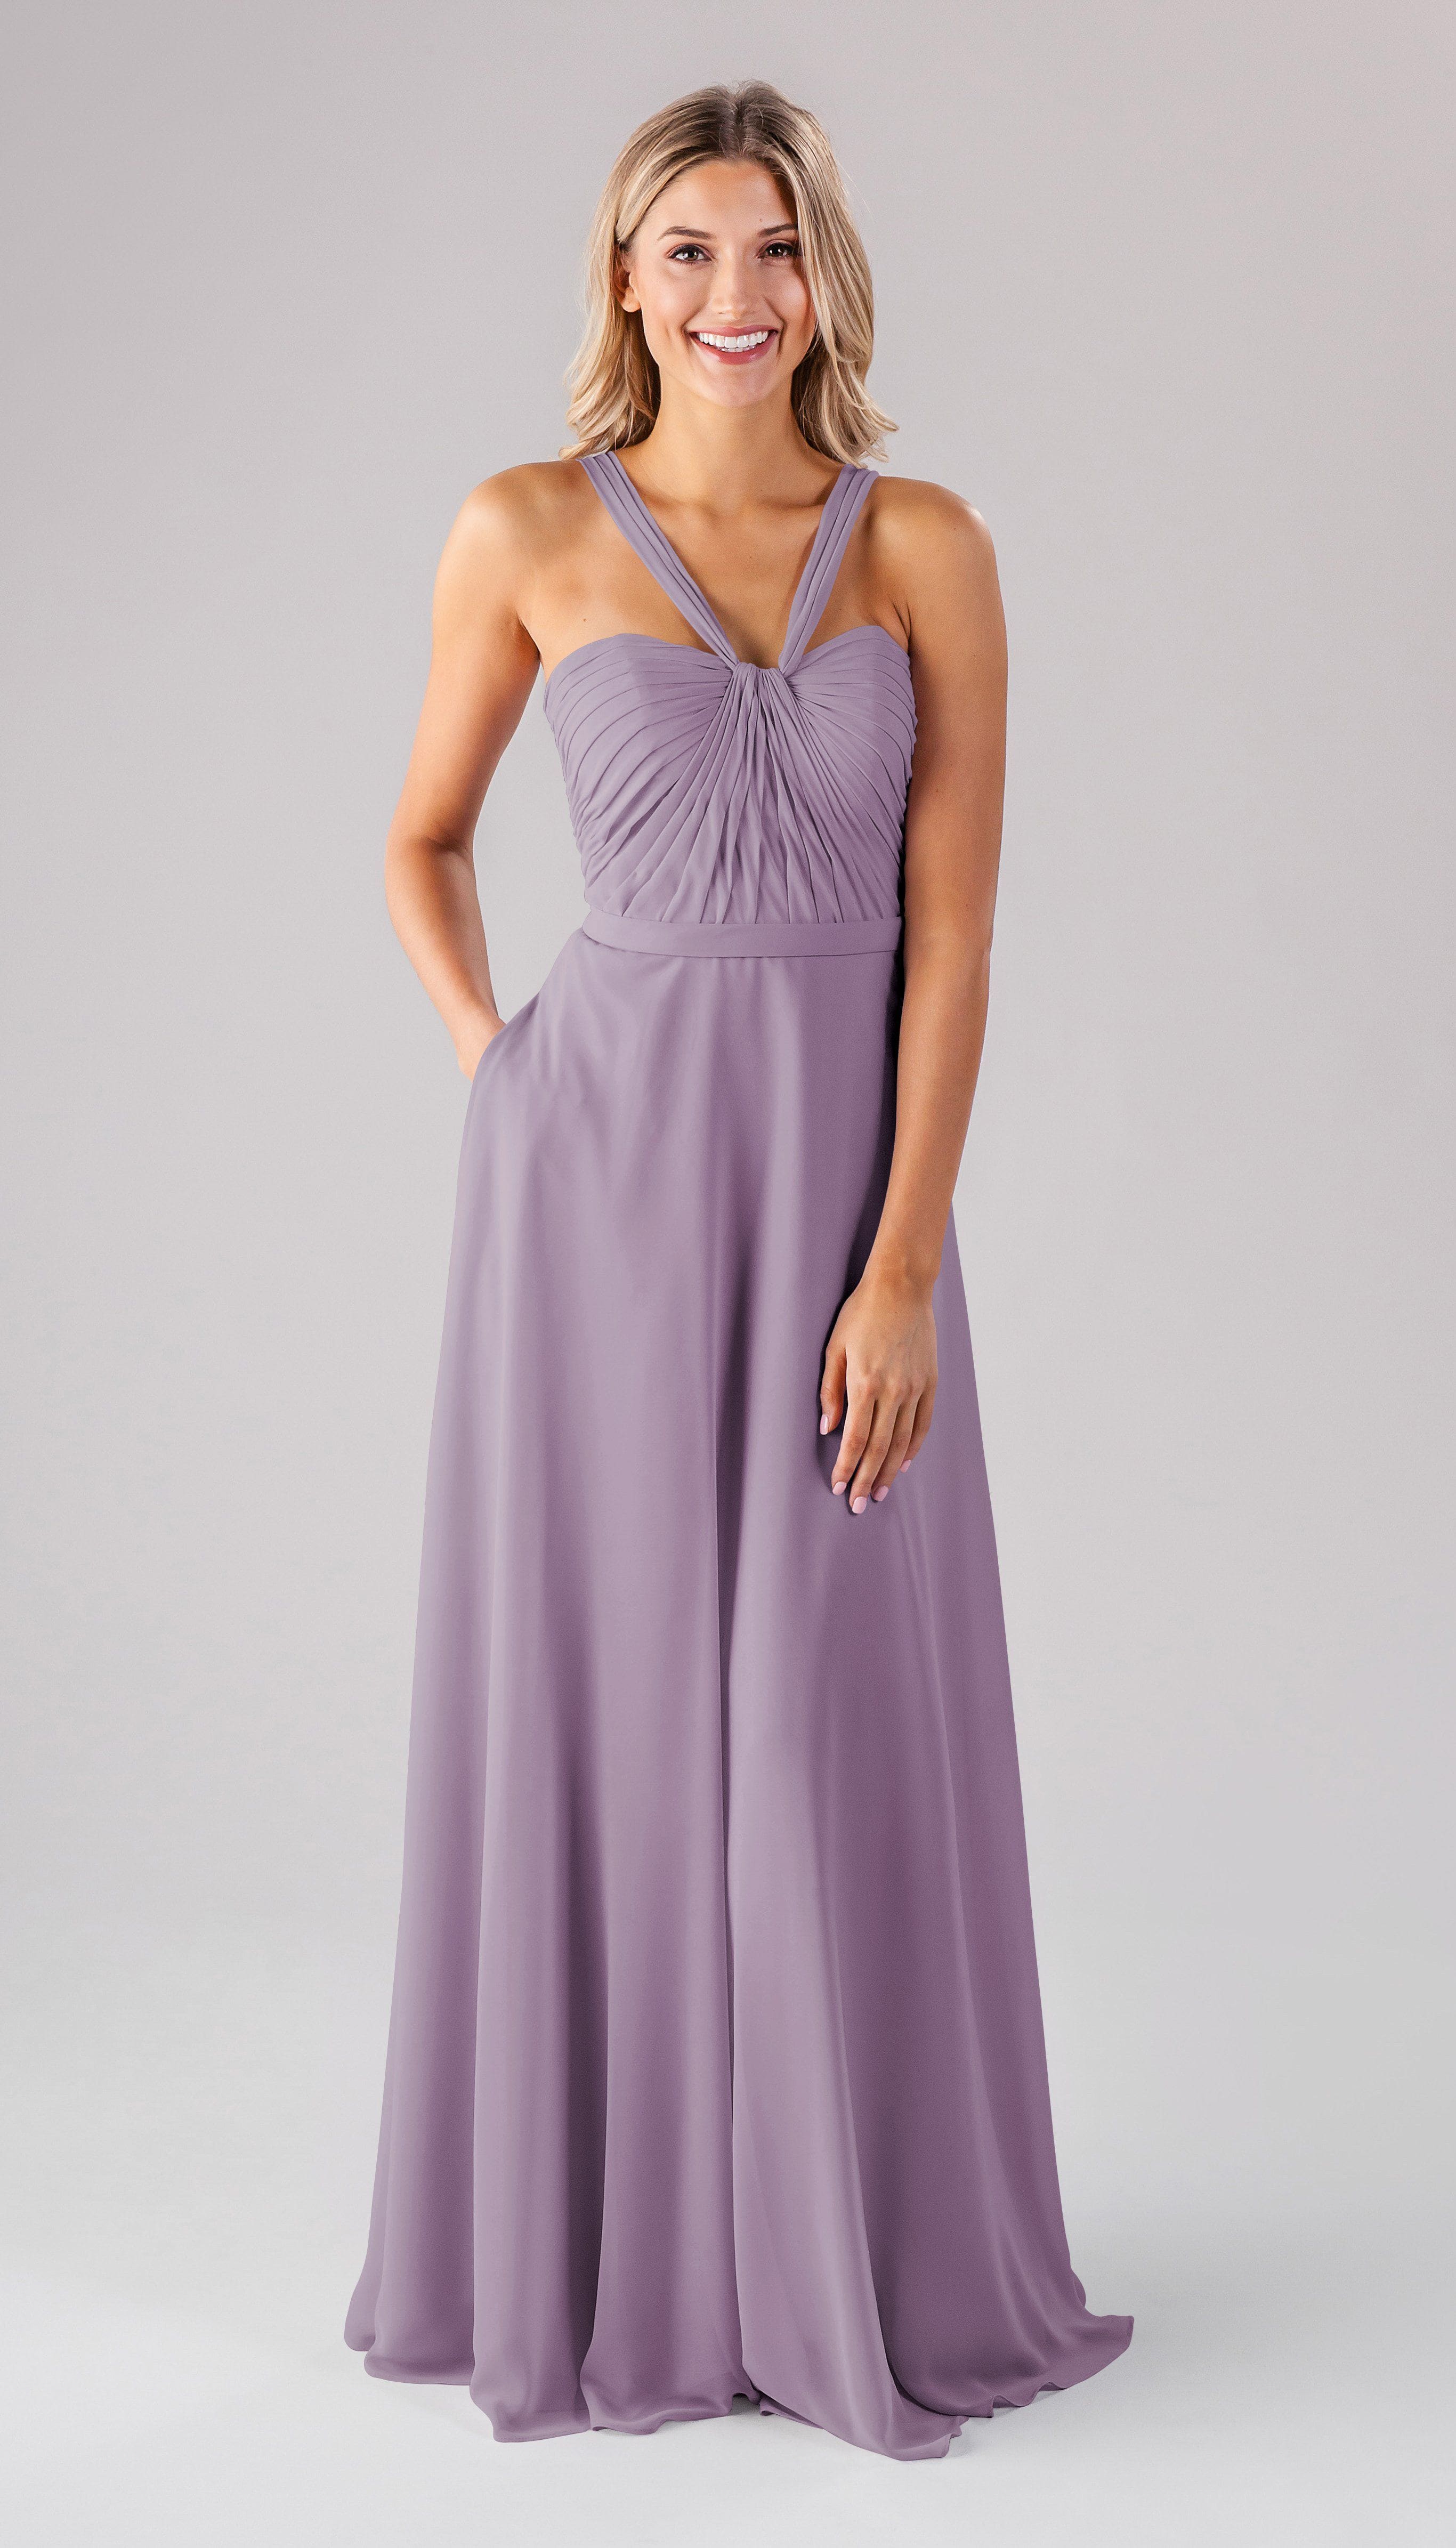 Sample Ivy Bridesmaid Dress | Kennedy Blue - Kennedy Blue